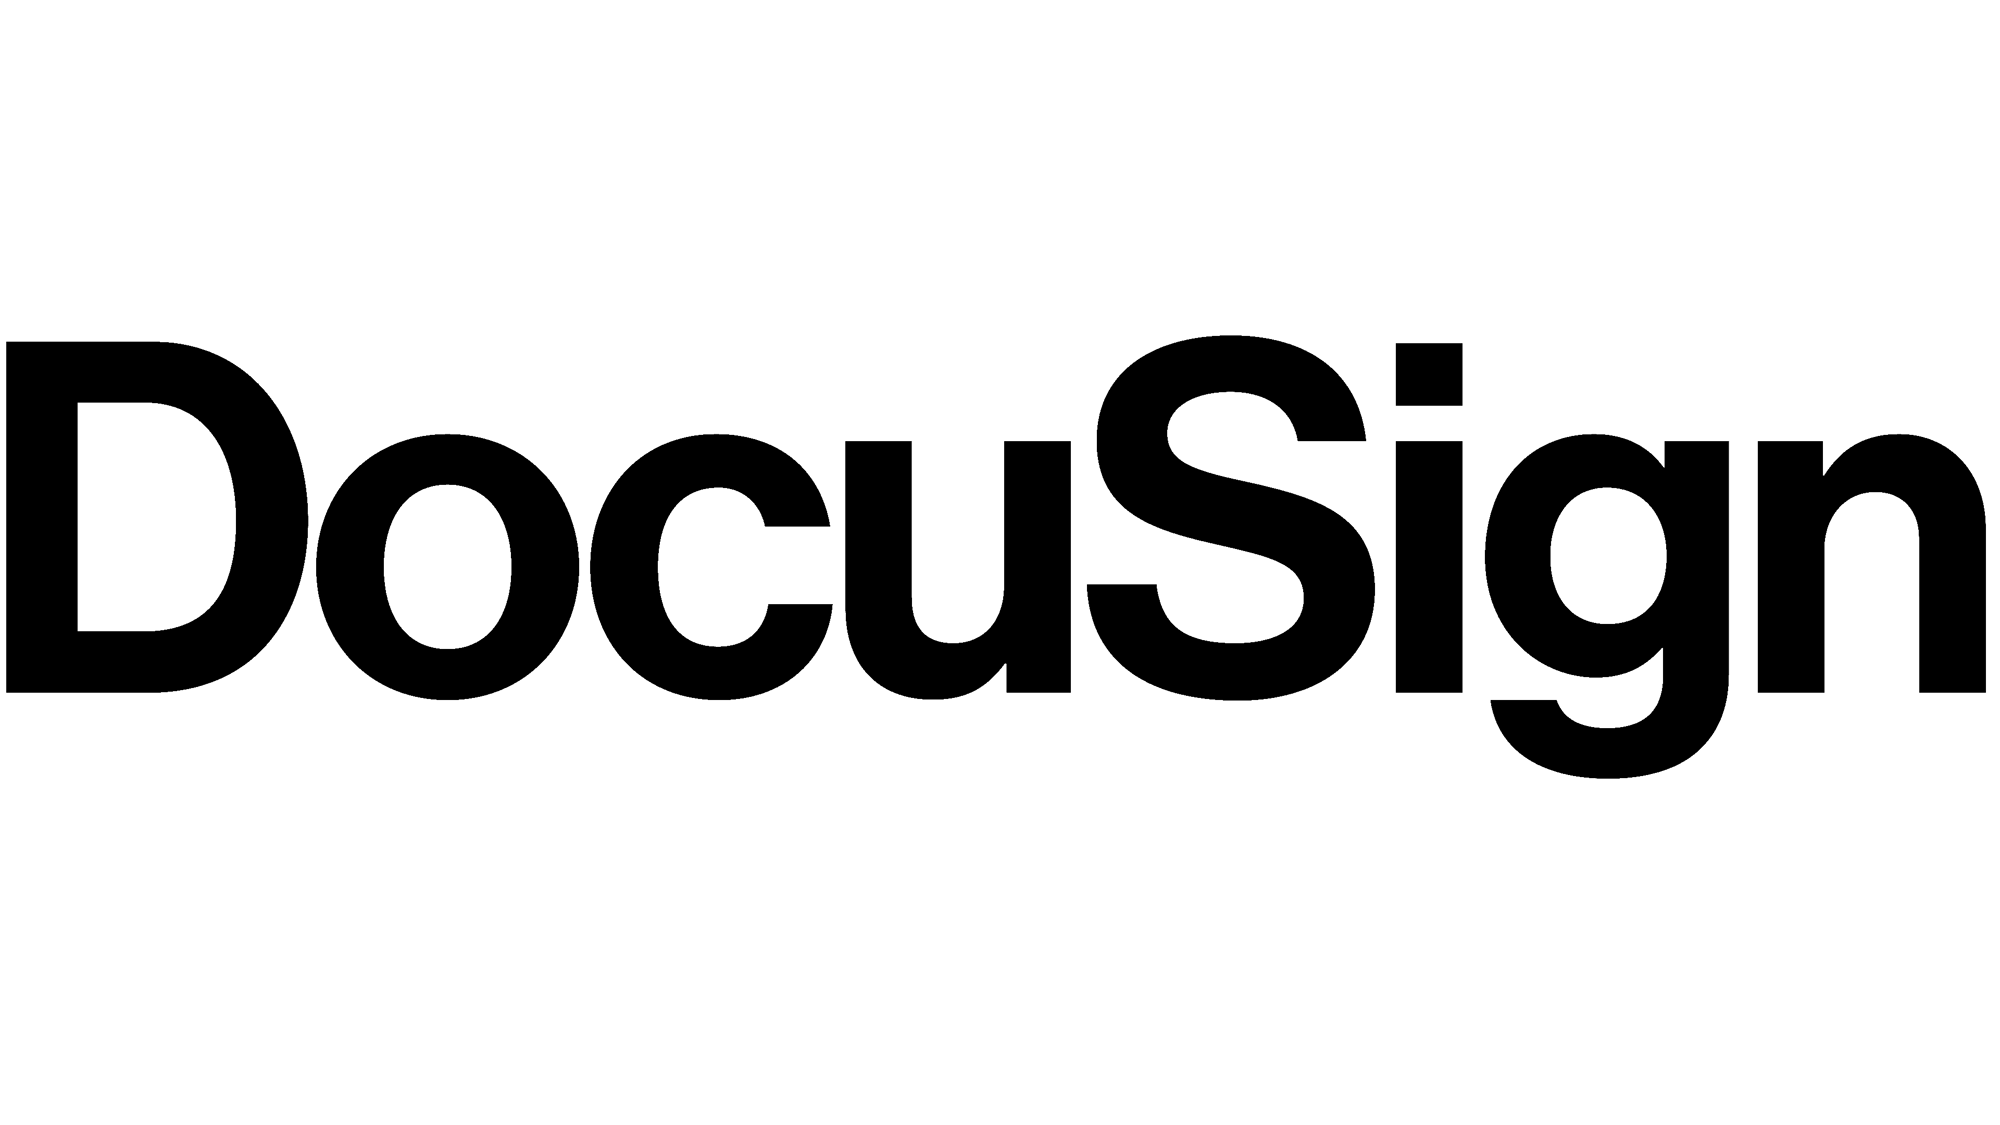 DocuSign-Logo